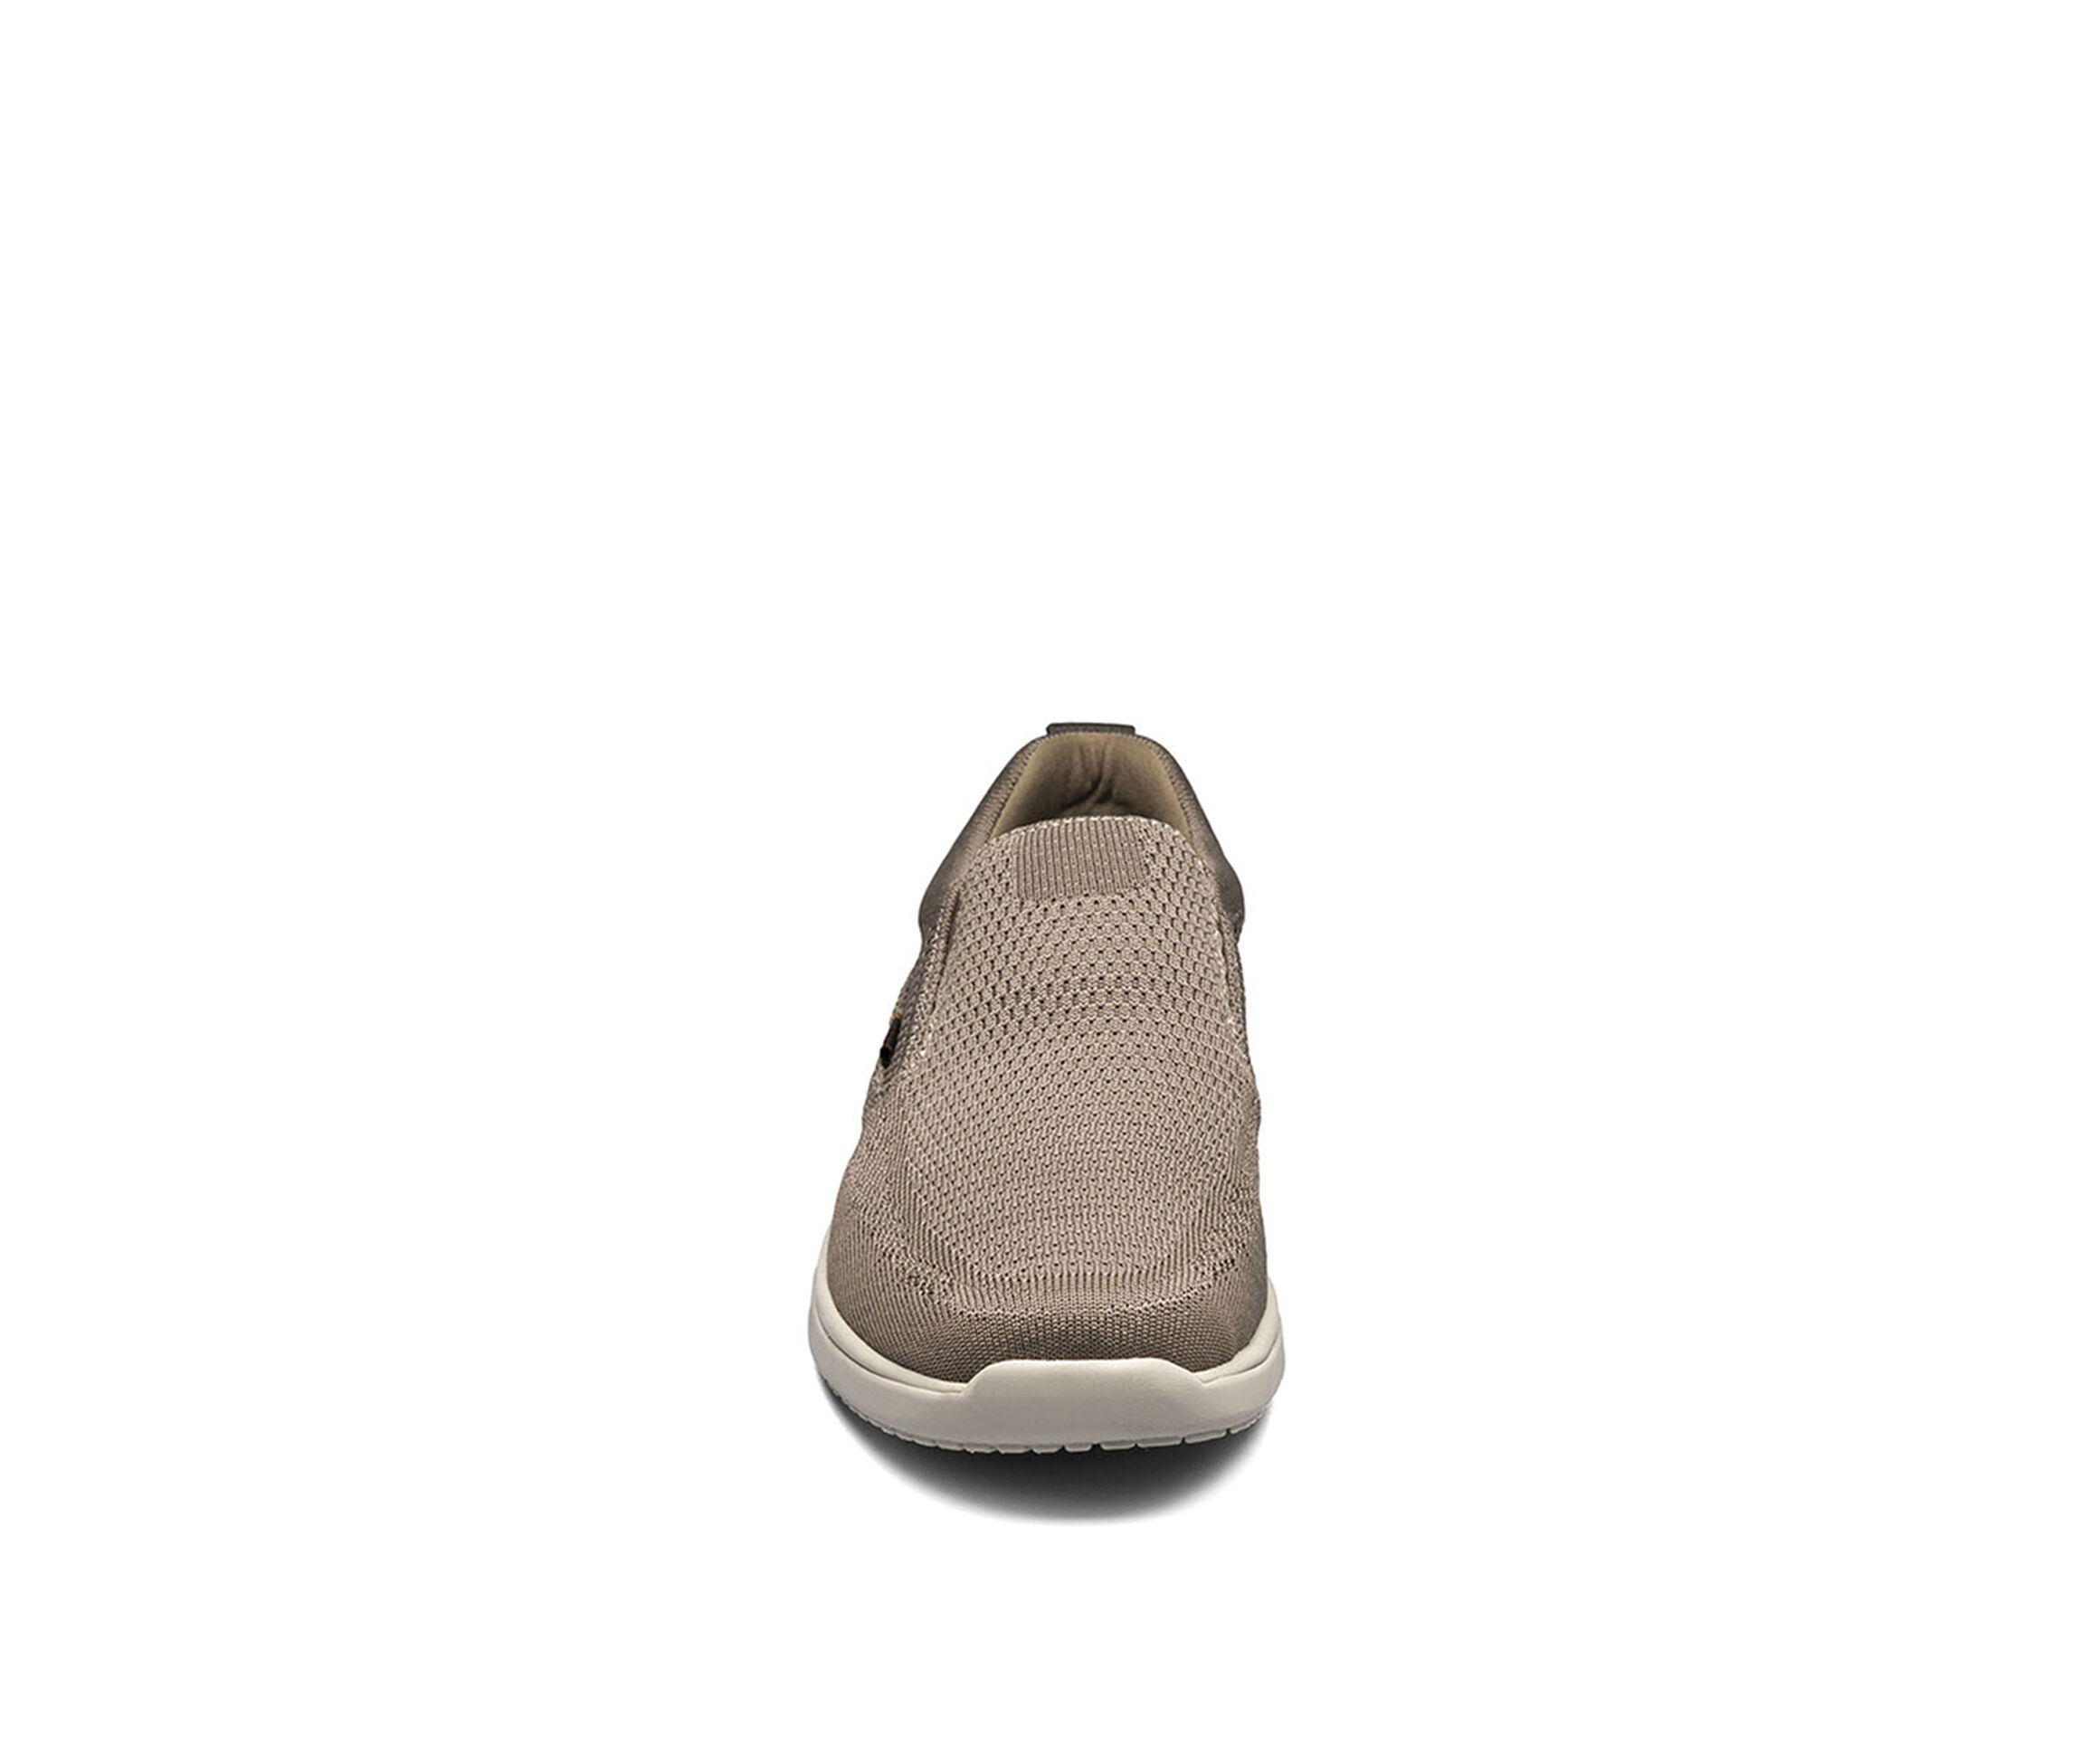 Details about   Nunn Bush Men's Conway Slip-on Loafer with Comfort Choose SZ/color